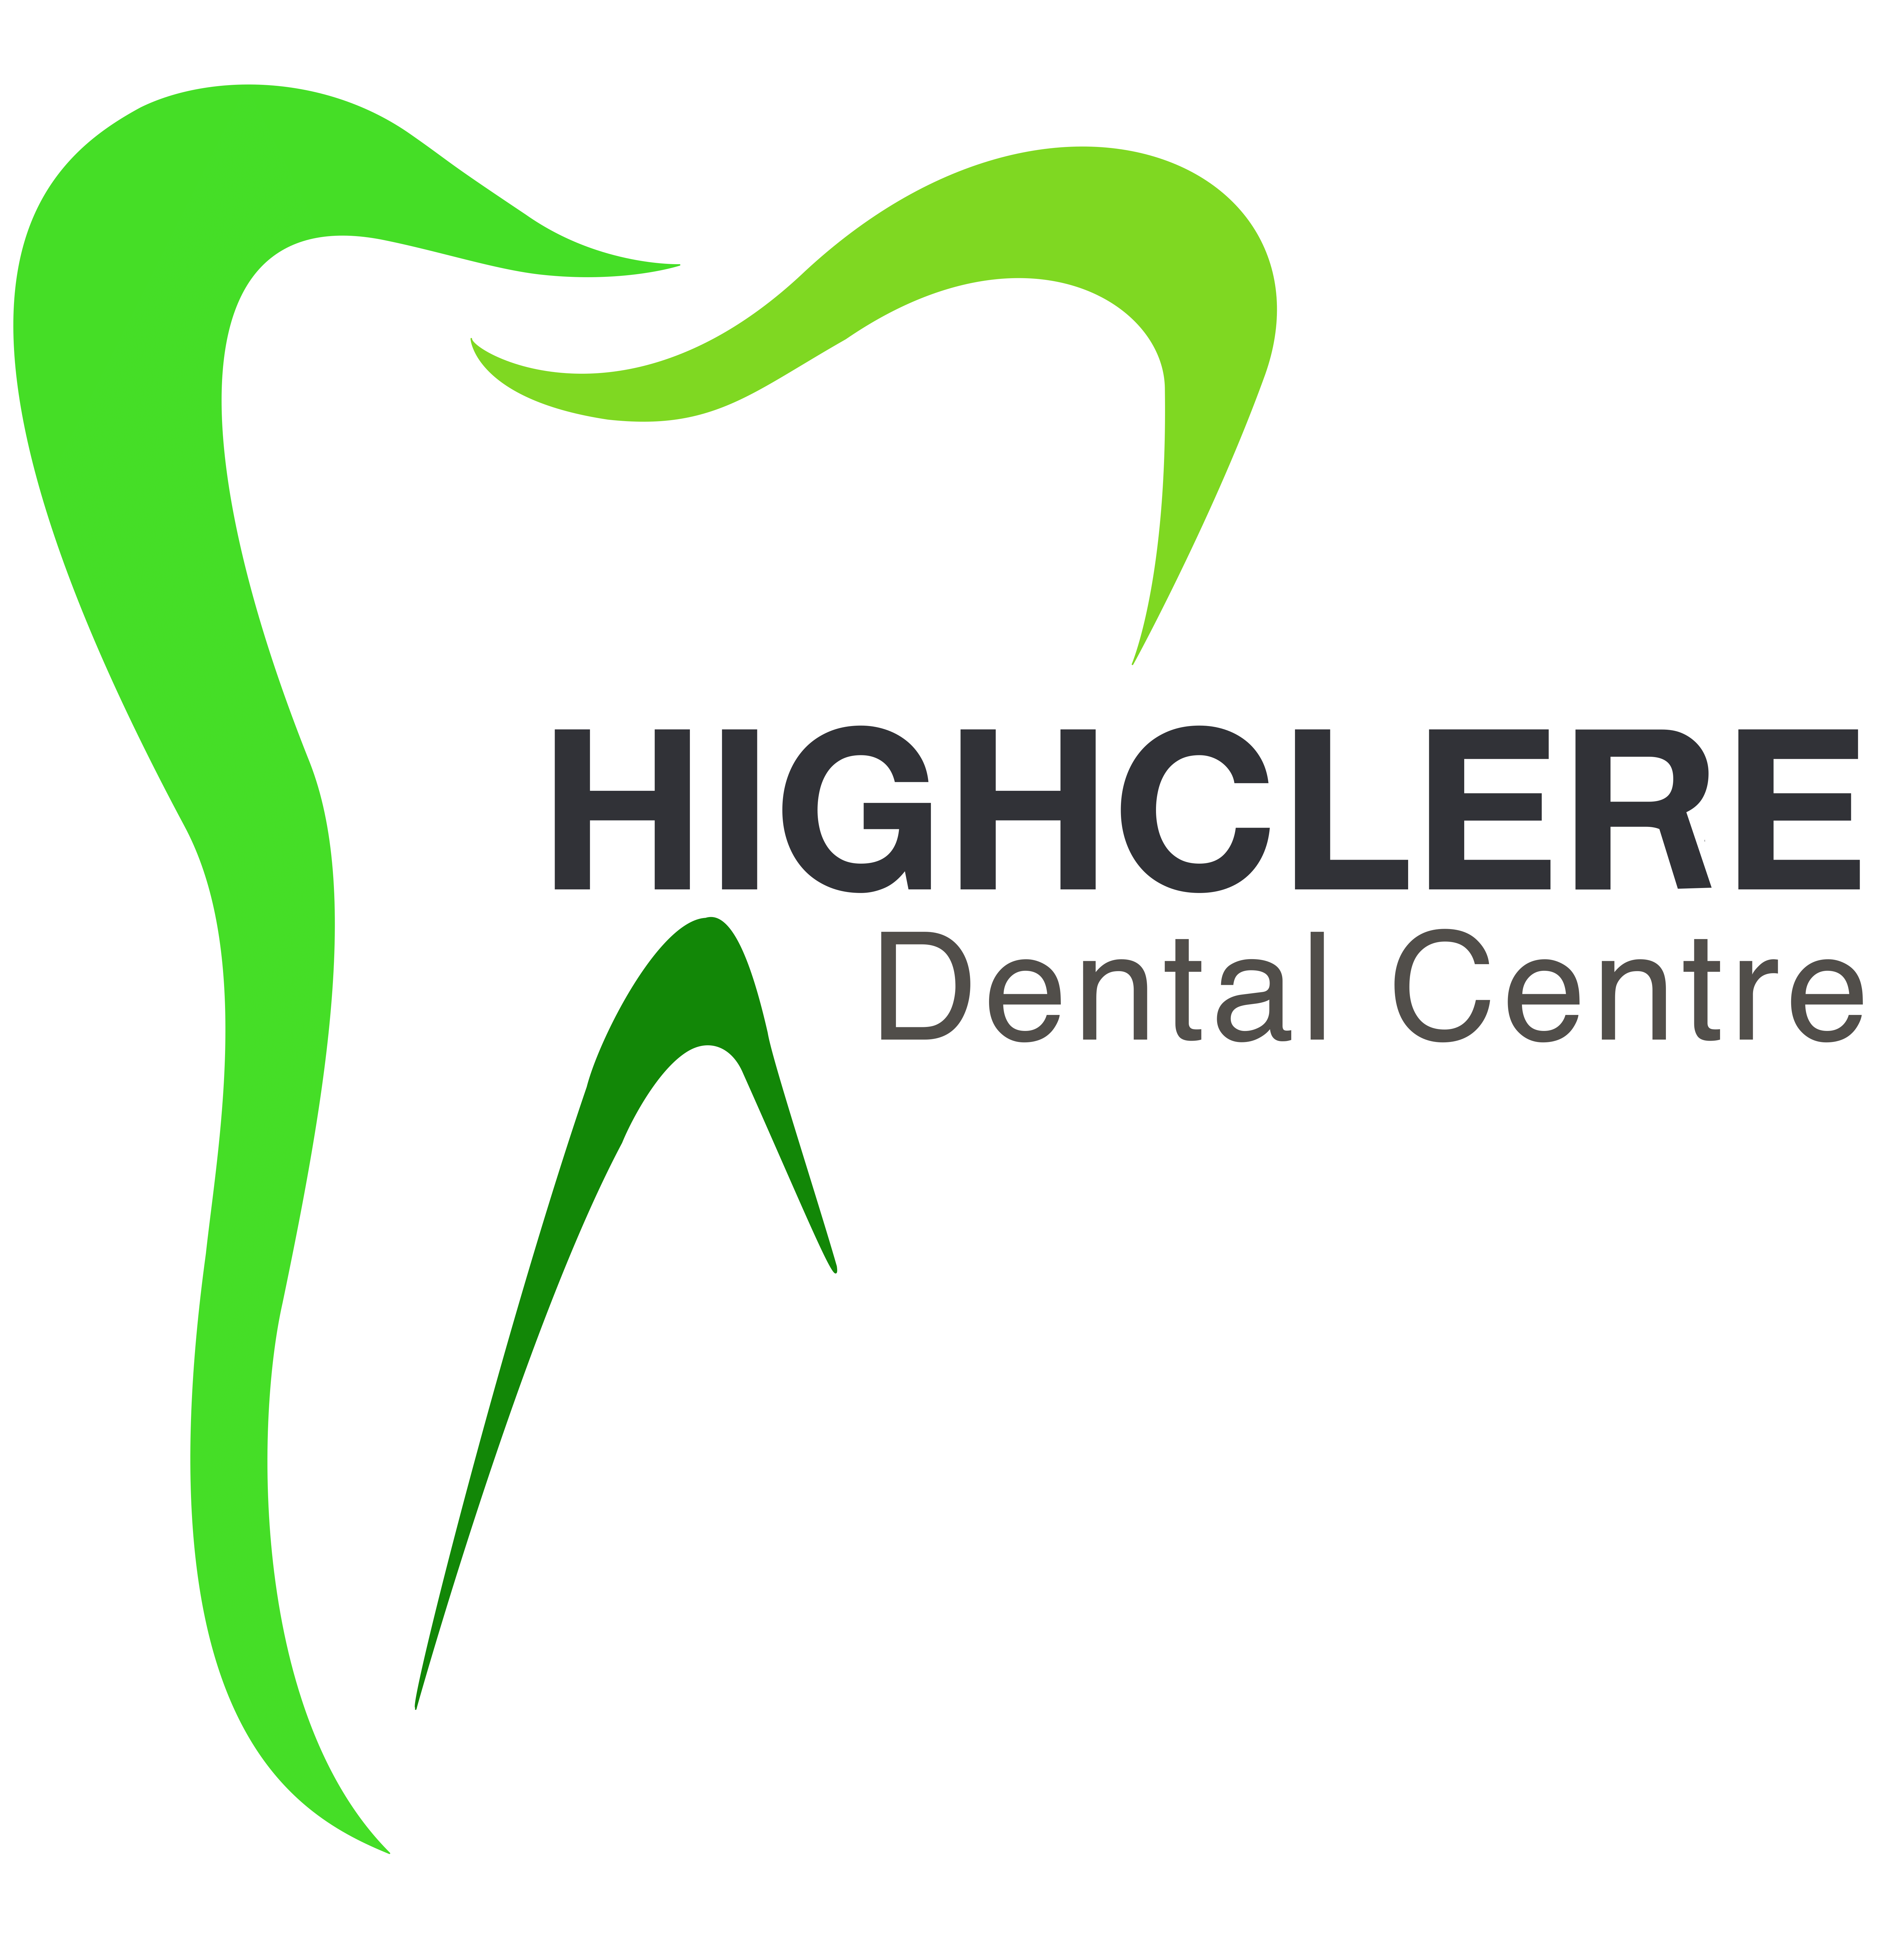 Highclere Dental